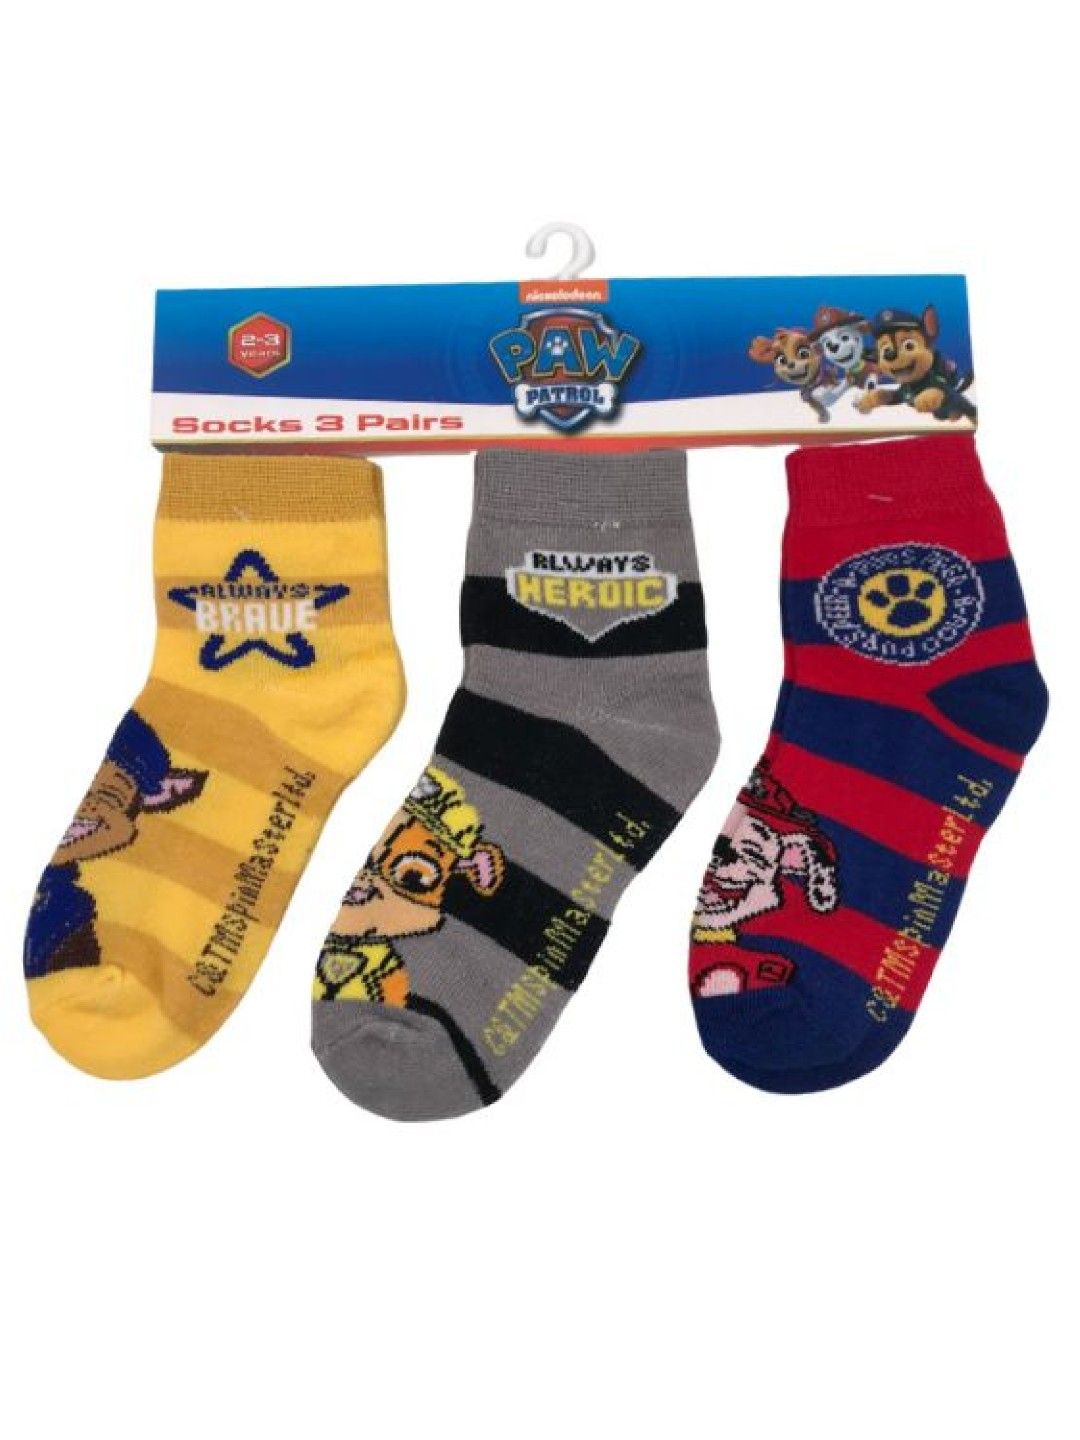 Enfant Paw Patrol Socks - Stripes Yellow, Gray, Red